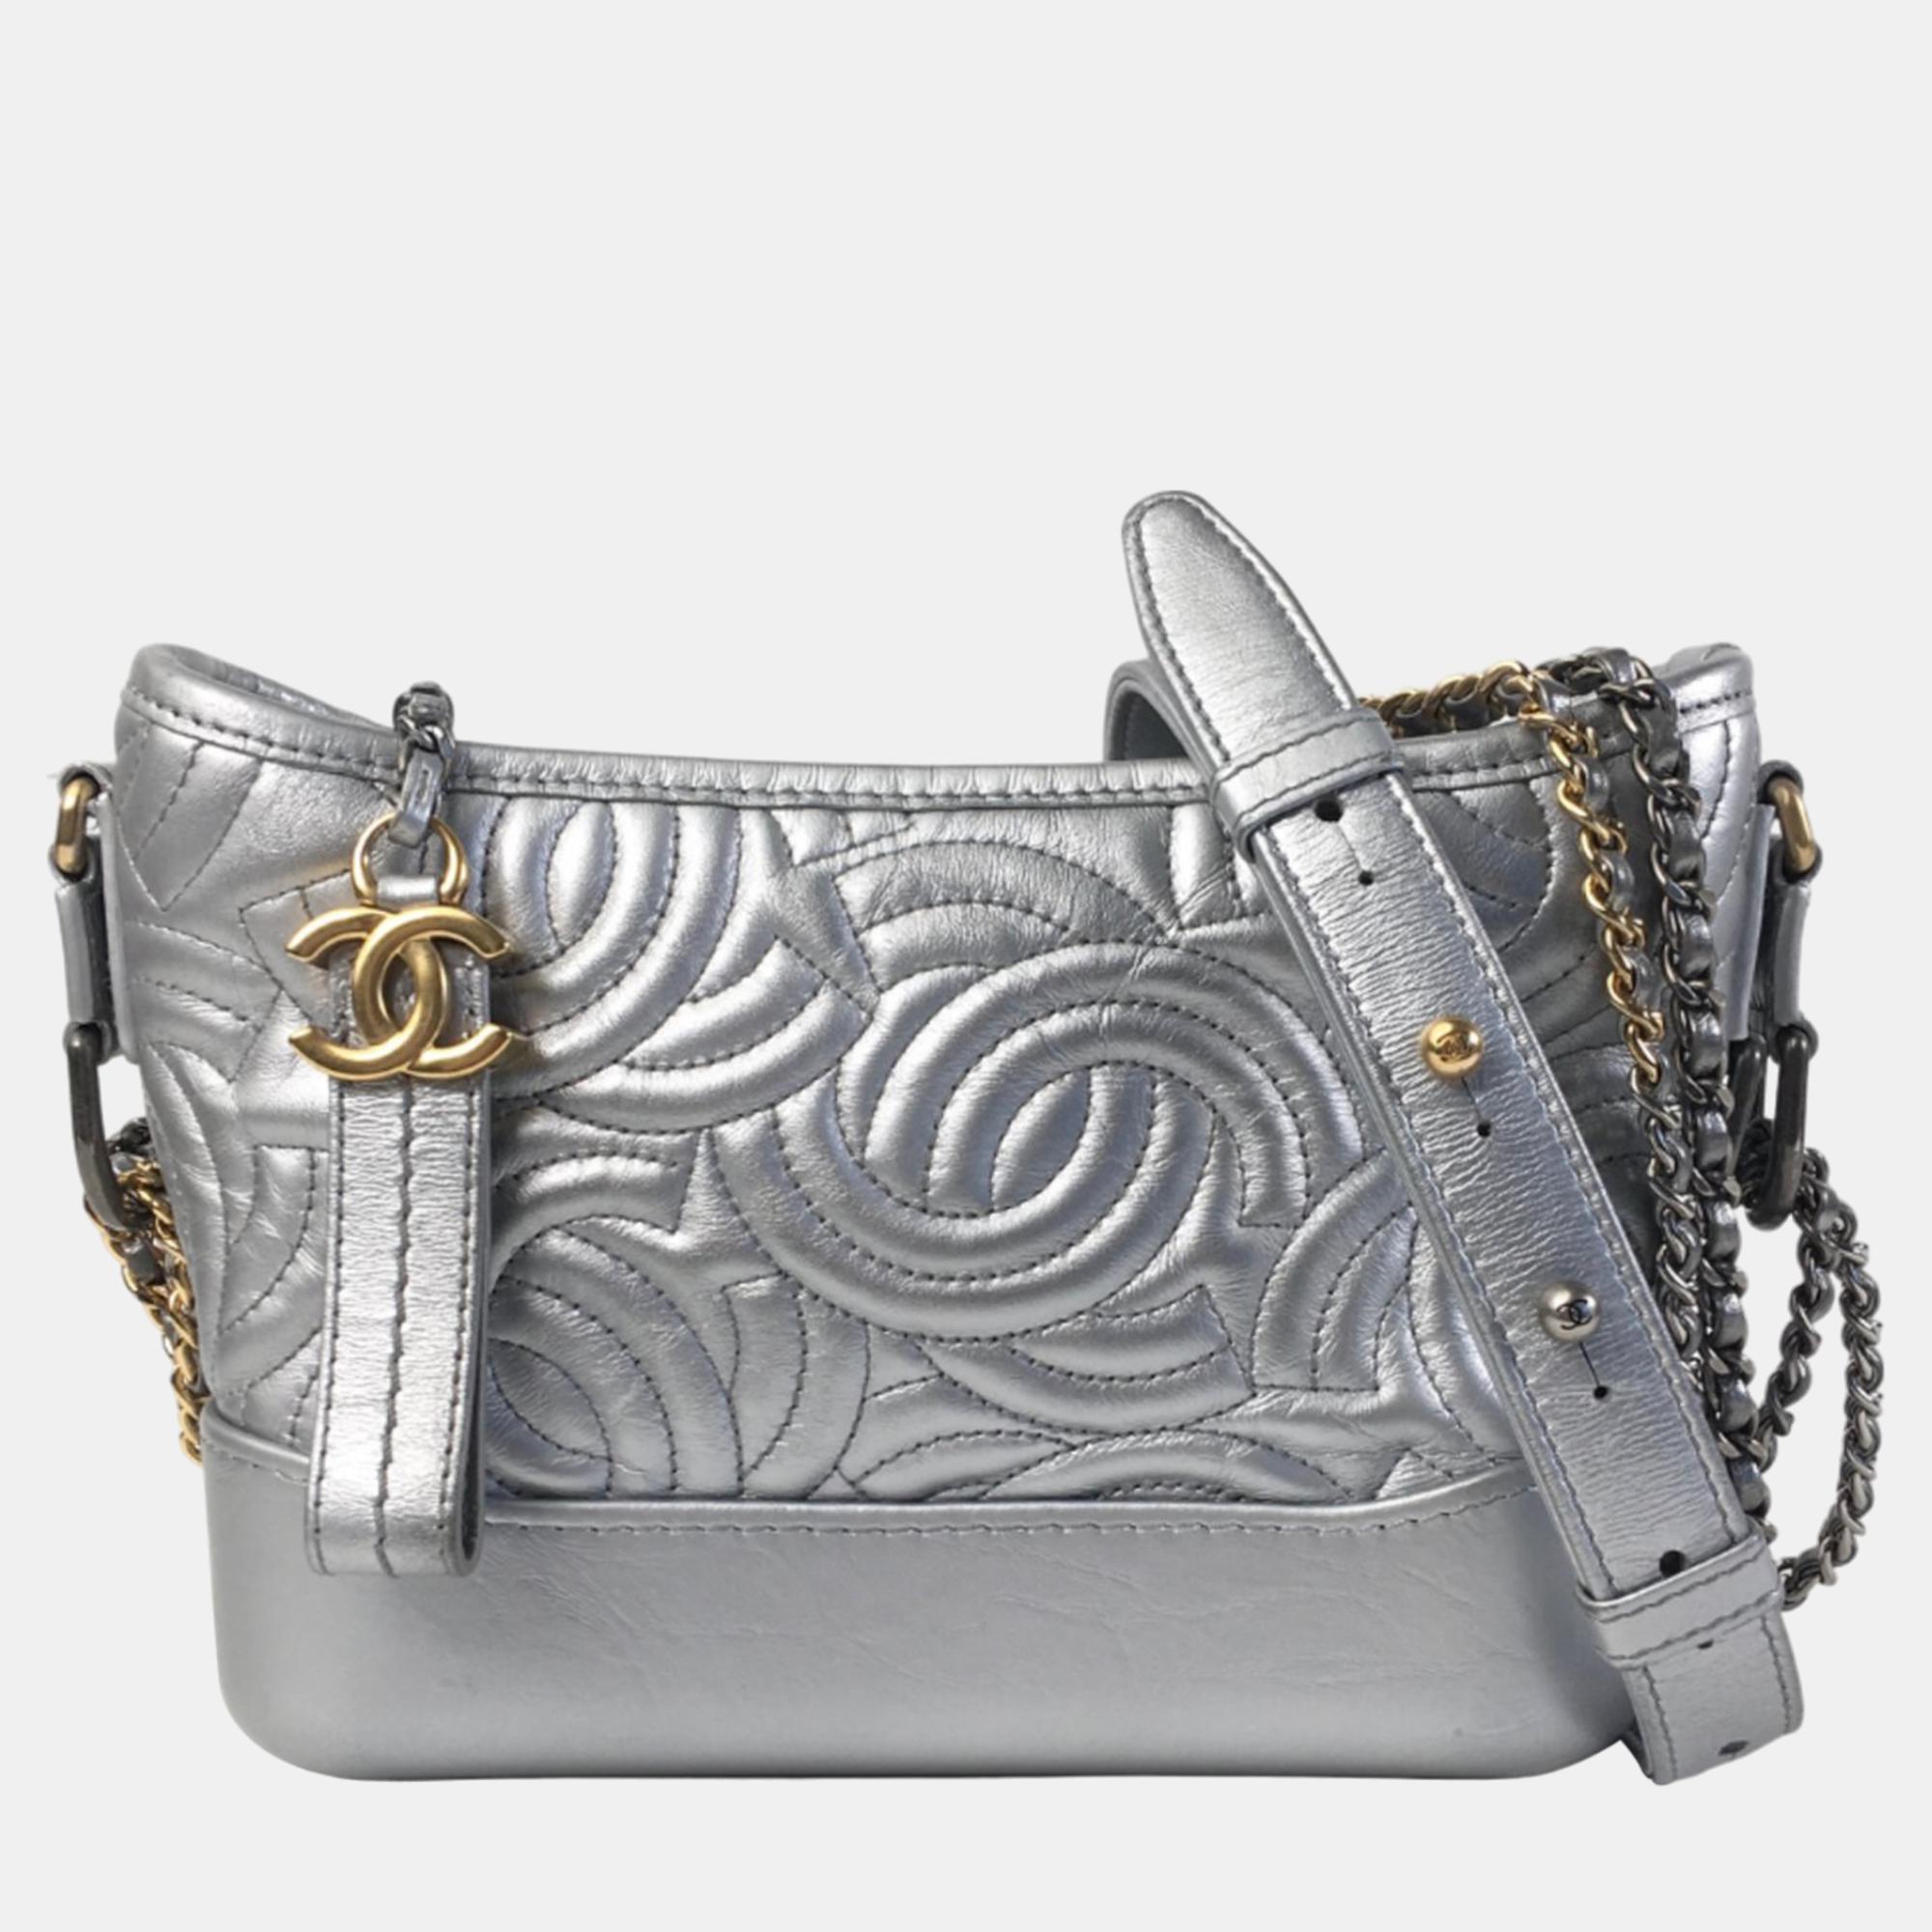 Chanel silver small cc stitched calfskin gabrielle crossbody bag